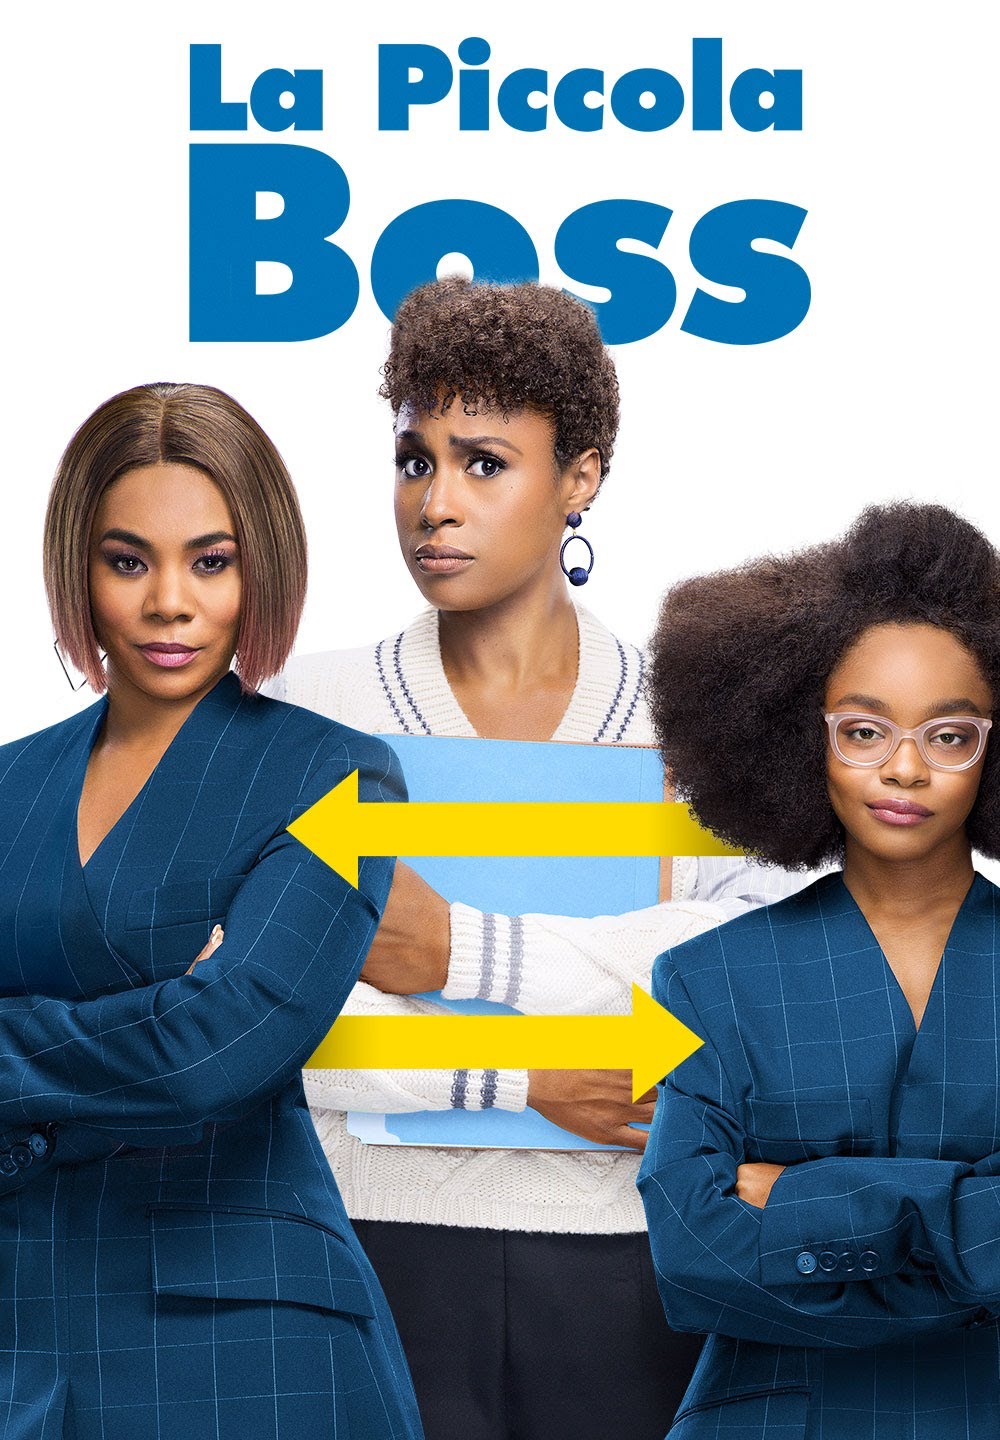 La piccola boss [HD] (2019)